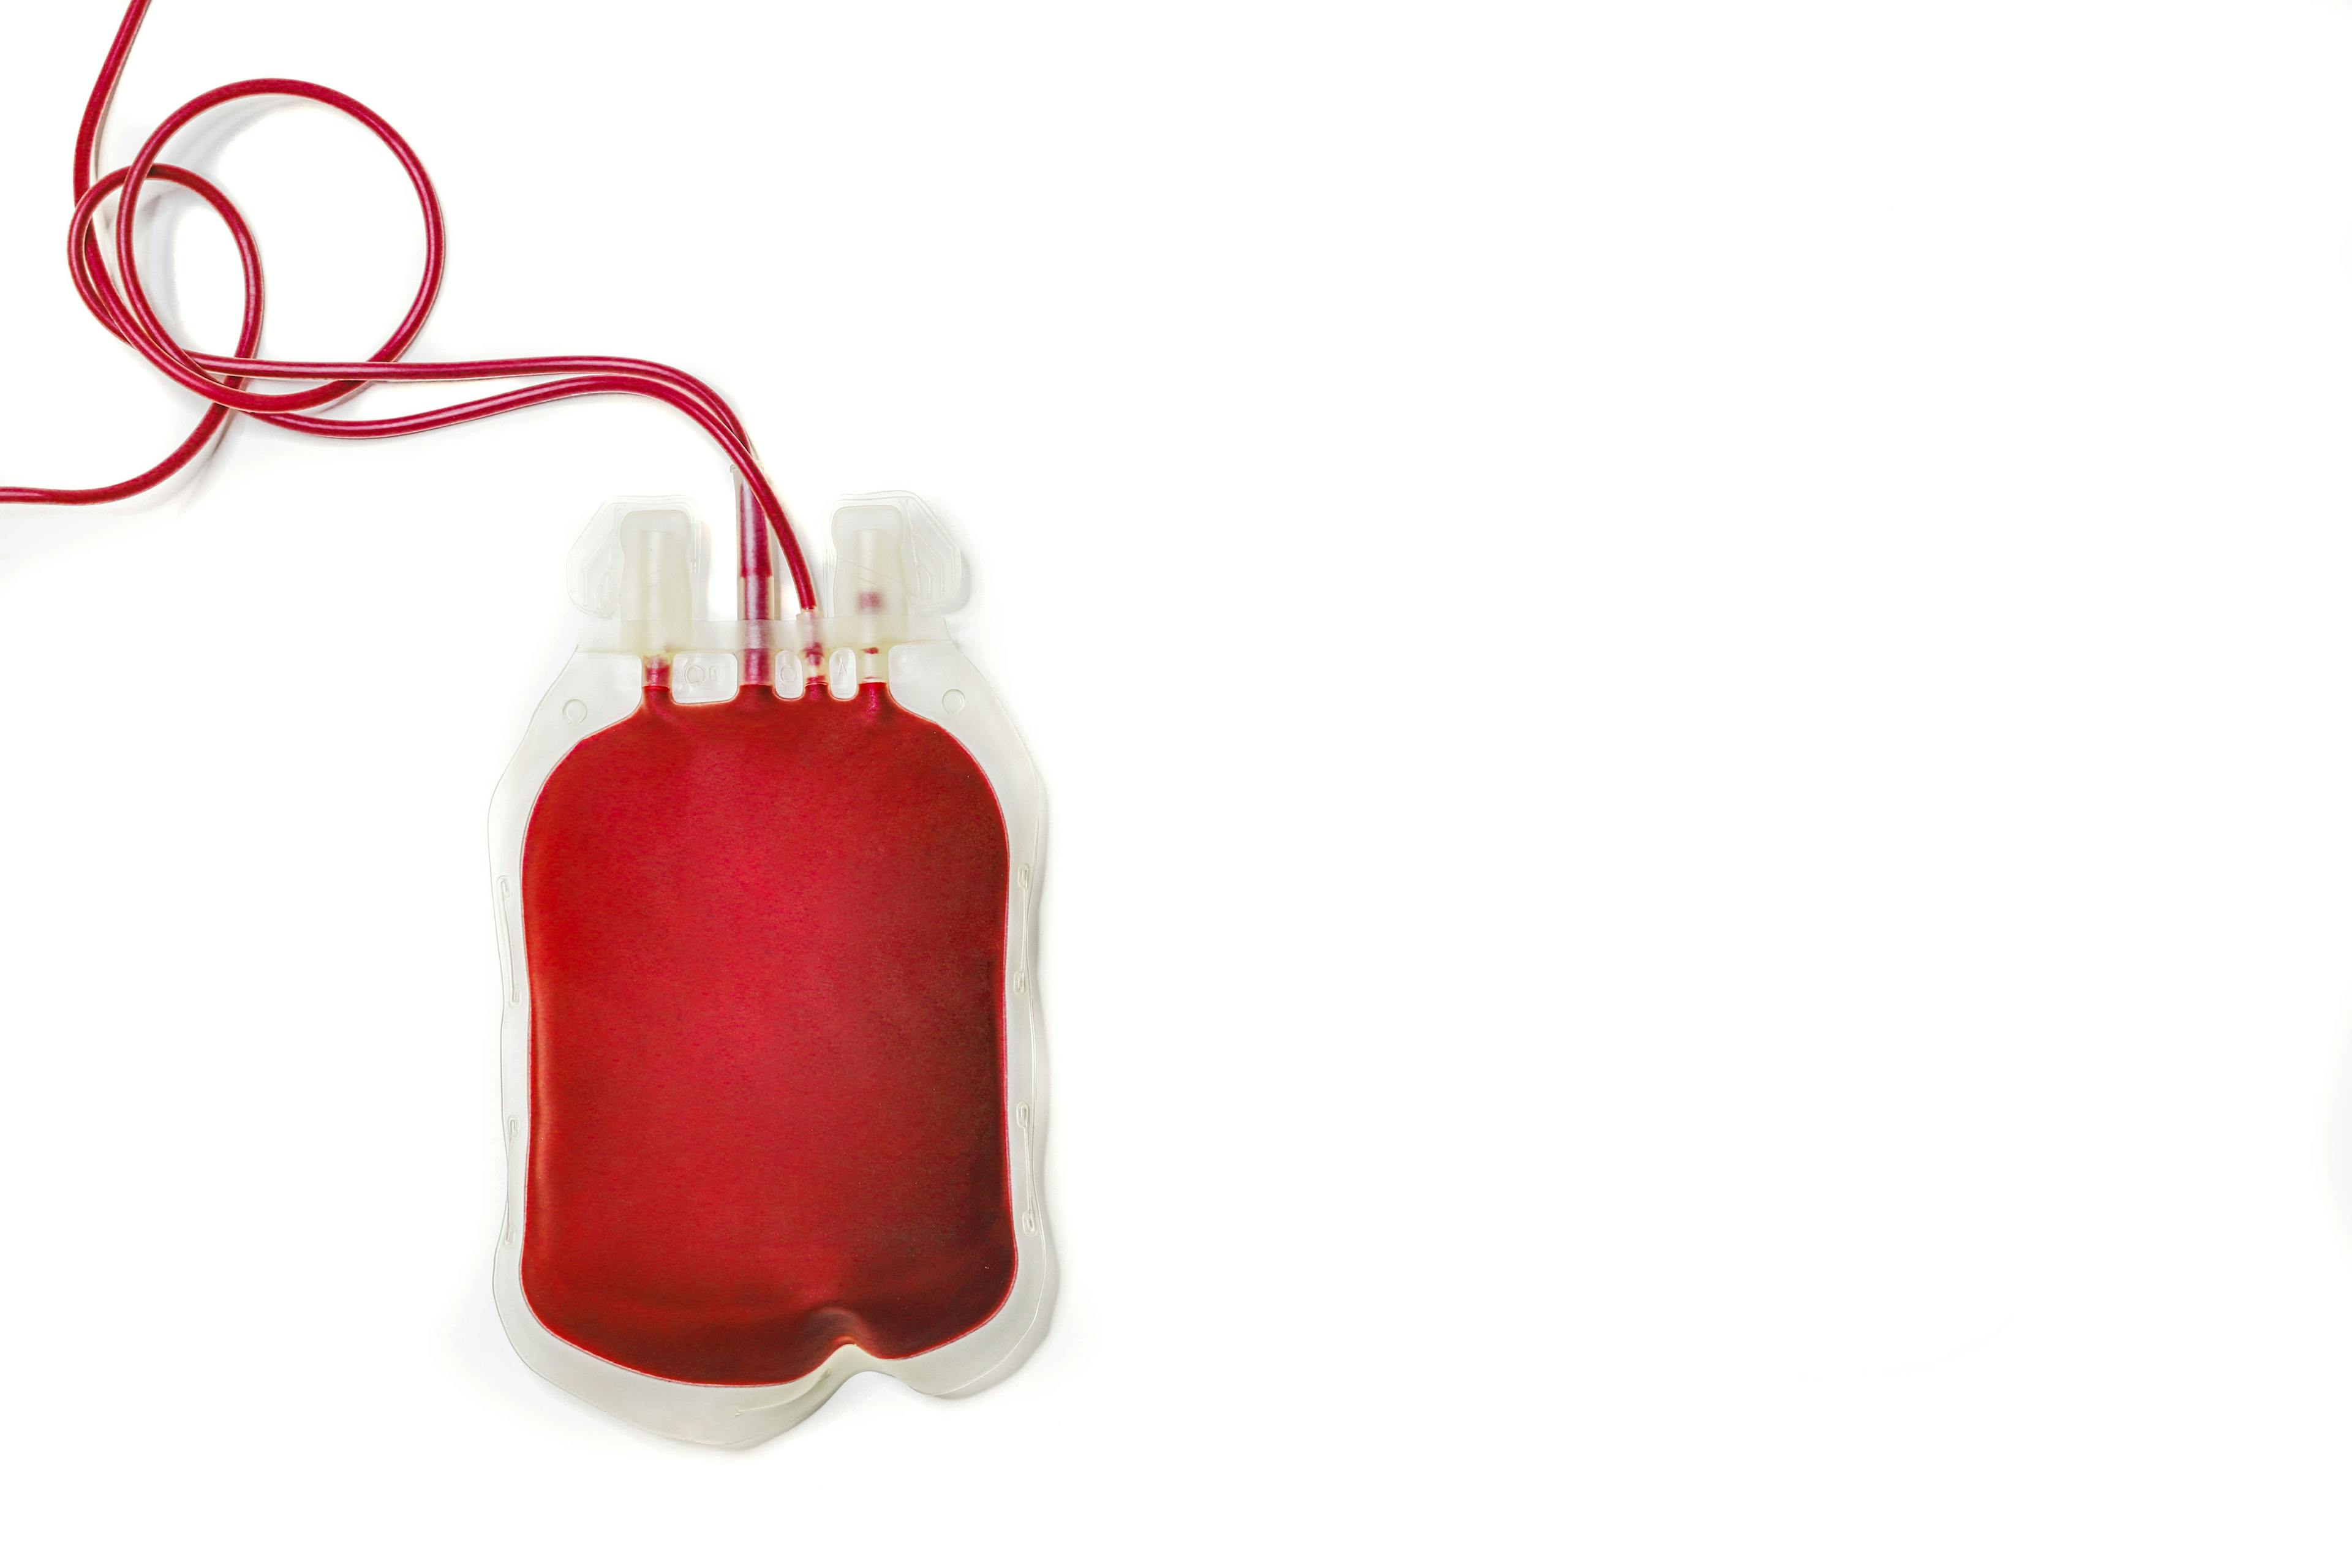 Blood donation bag | Image credit: SOPONE - stock.adobe.com